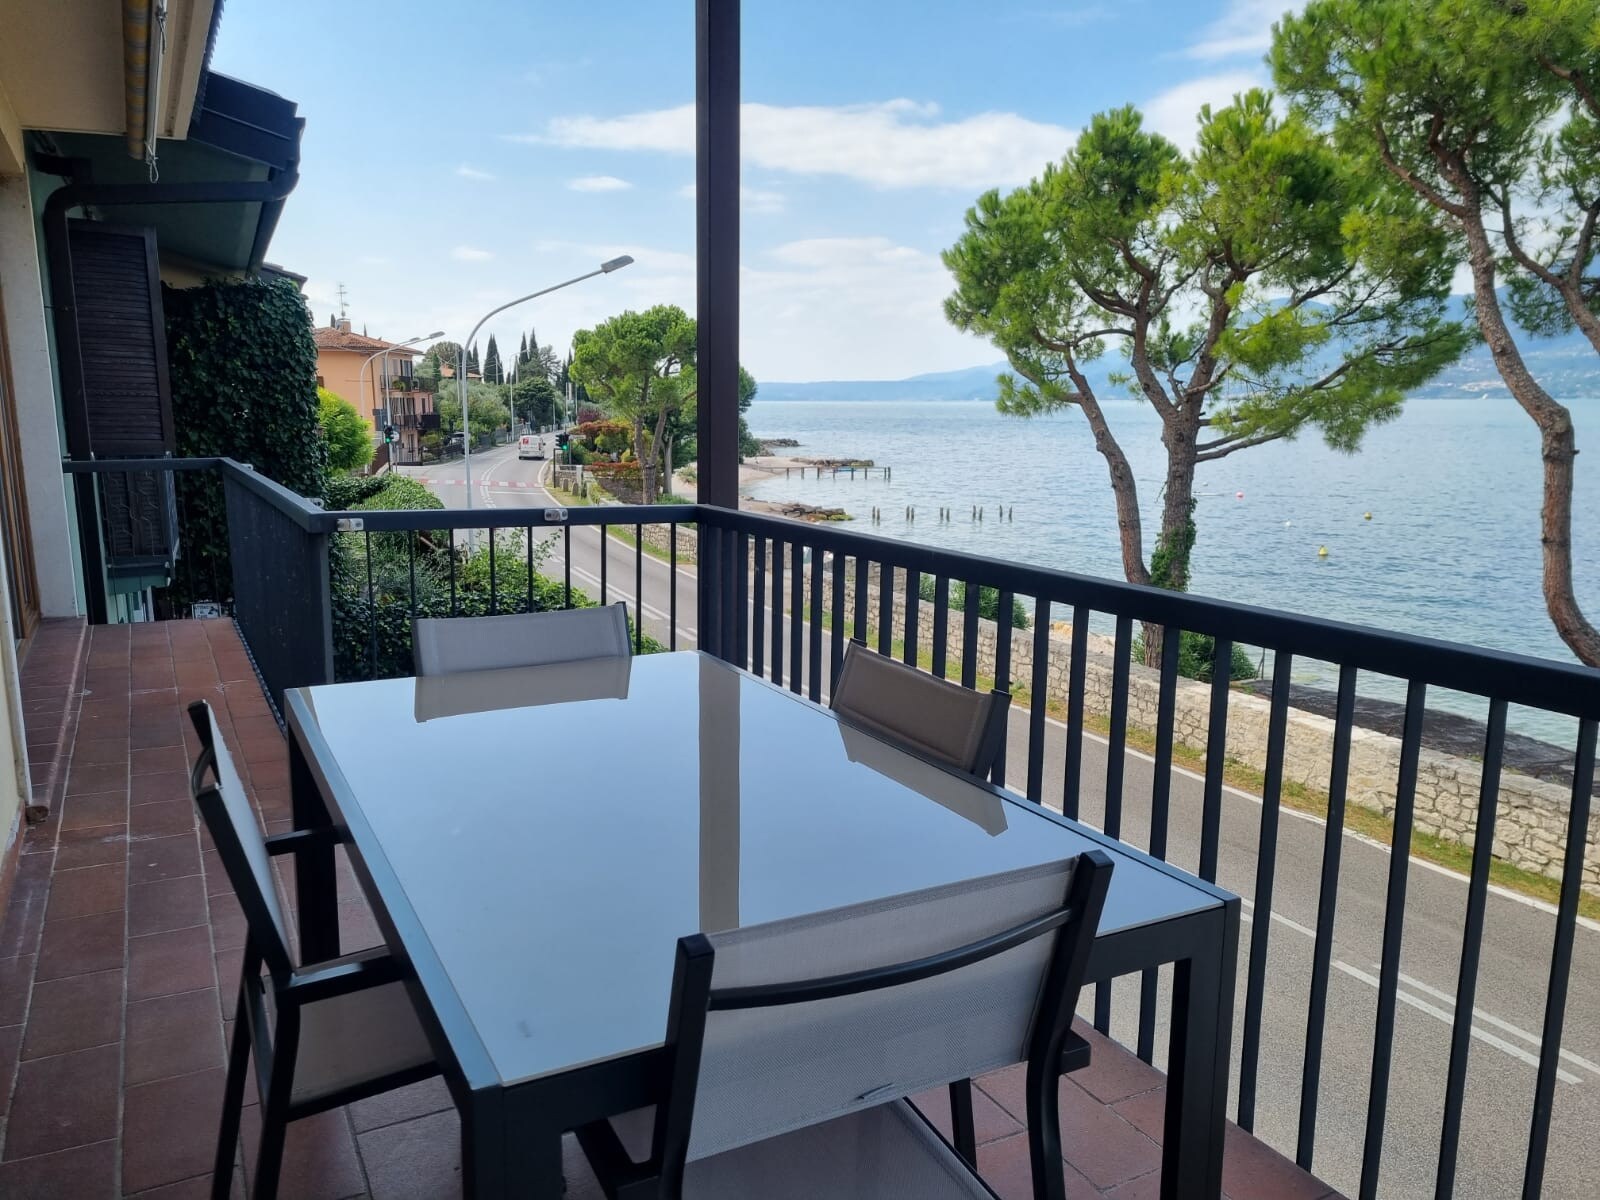 Property Image 2 - 2 Bedroom Apartment in Pai next to Lake Garda